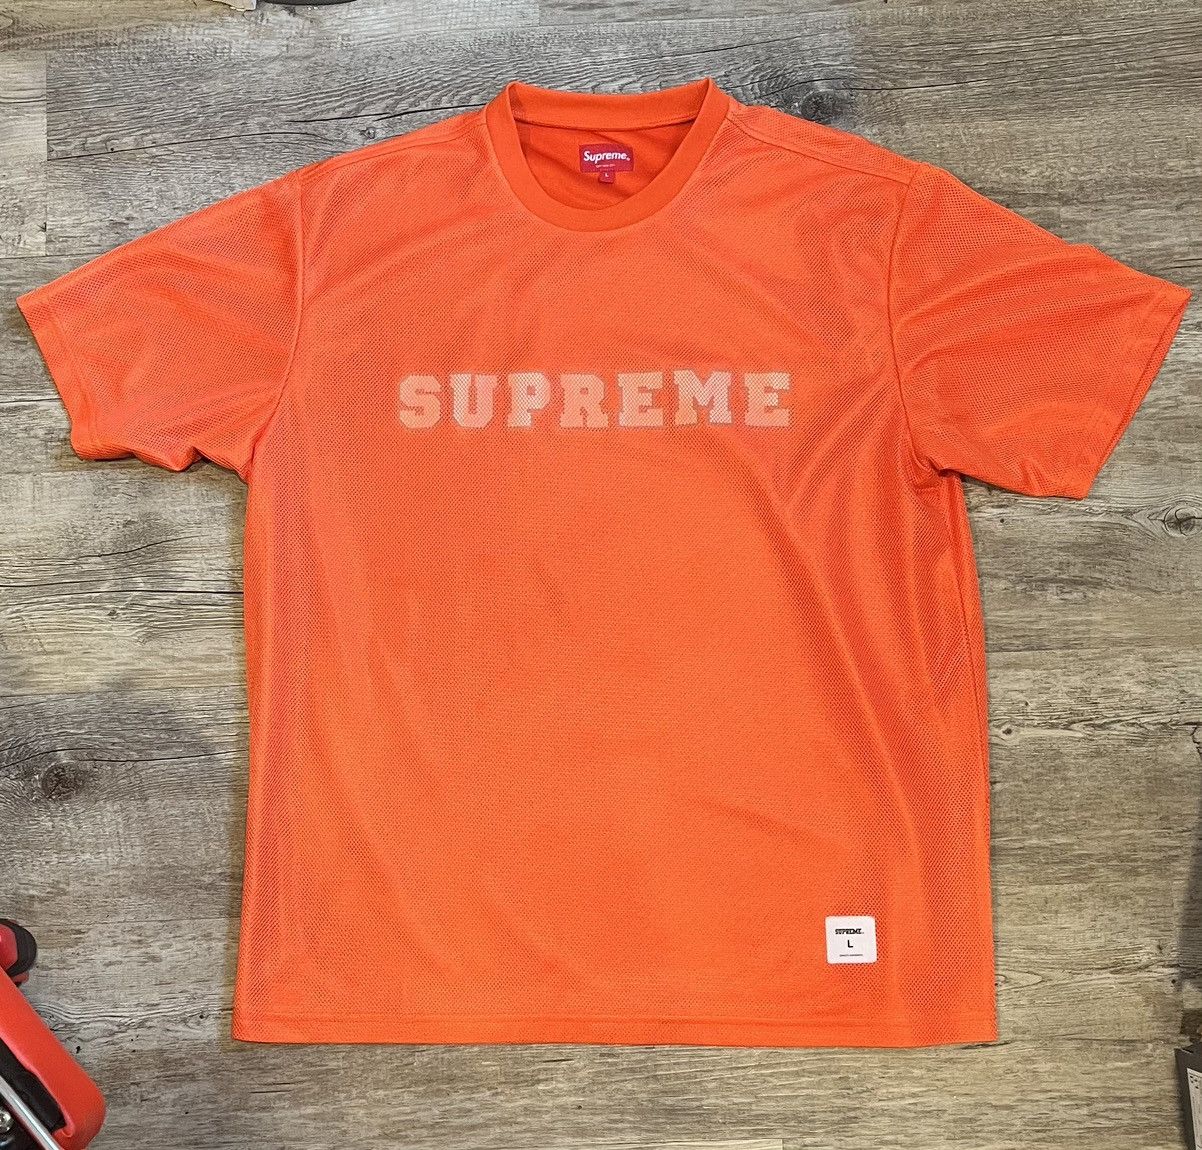 Supreme Supreme t shirt | Grailed